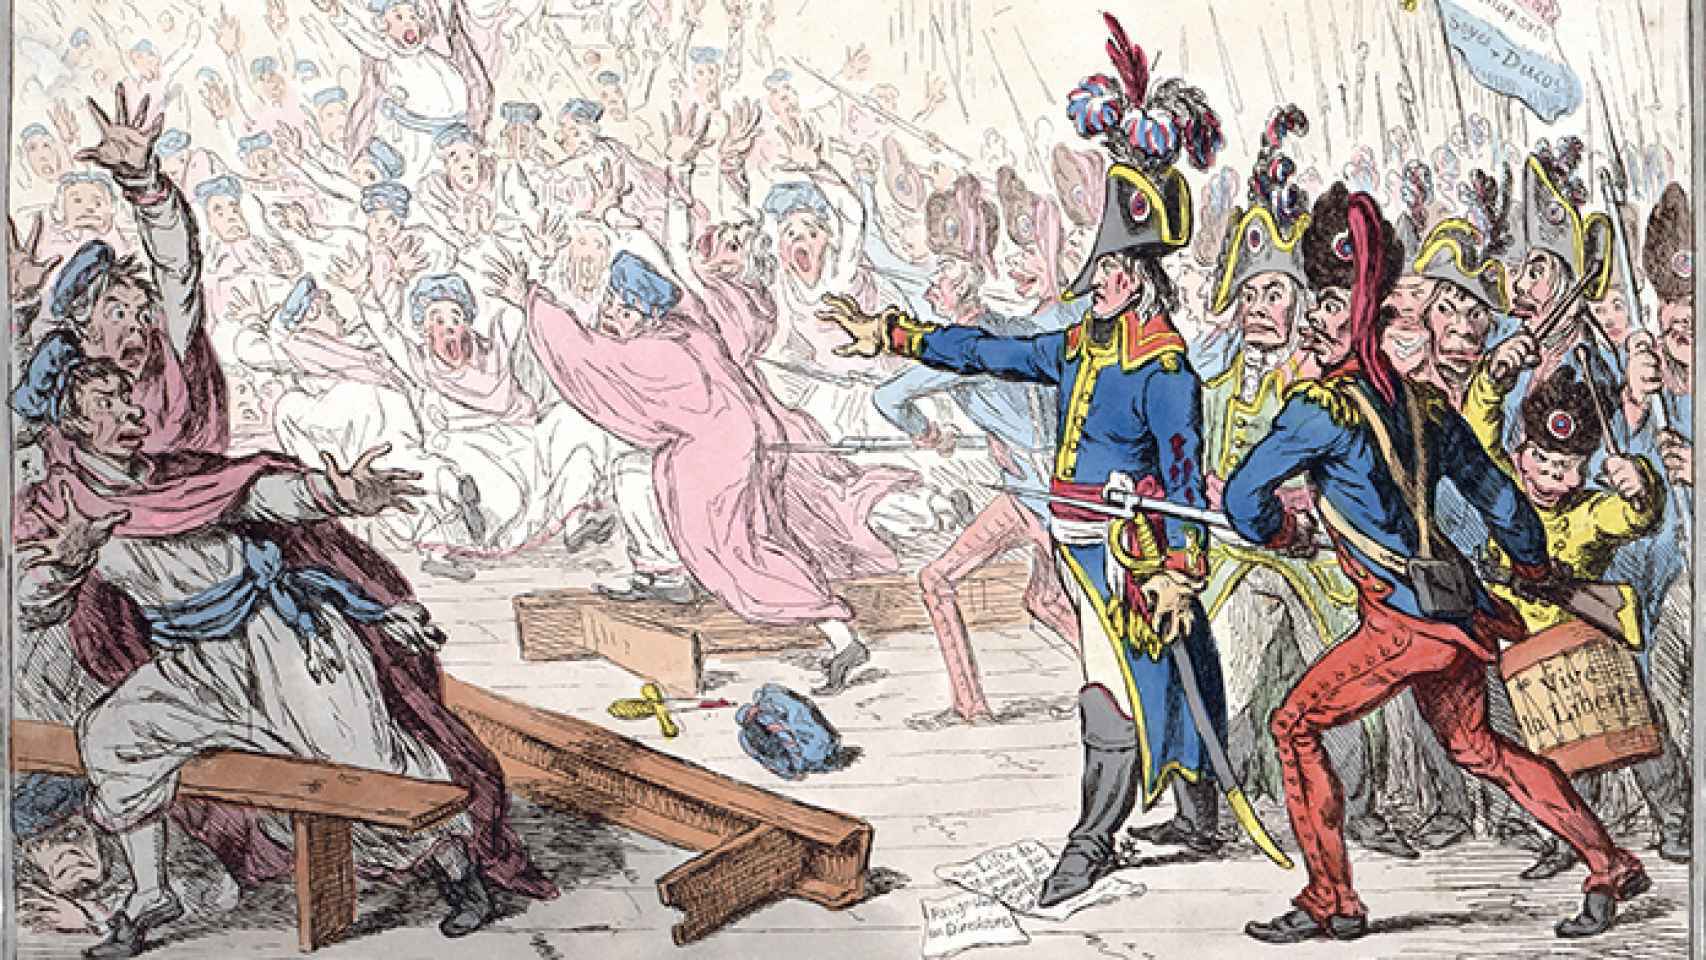 'Exit liberté à la François' (1799). Caricatura de Napoleón al frente de las tropas revolucionarias